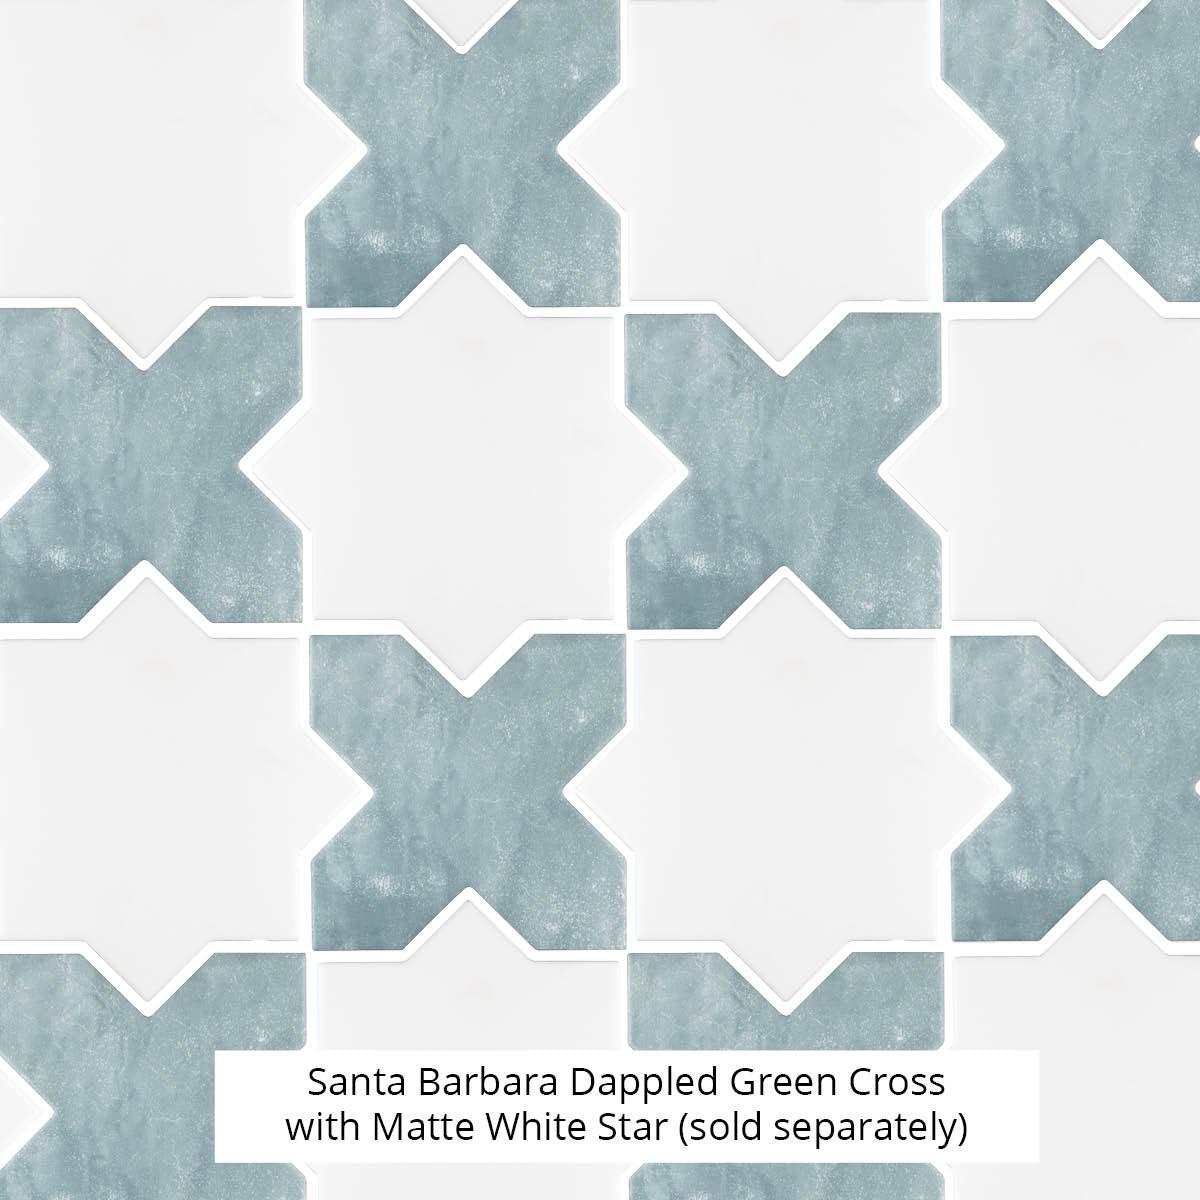 Santa Barbara Dappled Green Cross